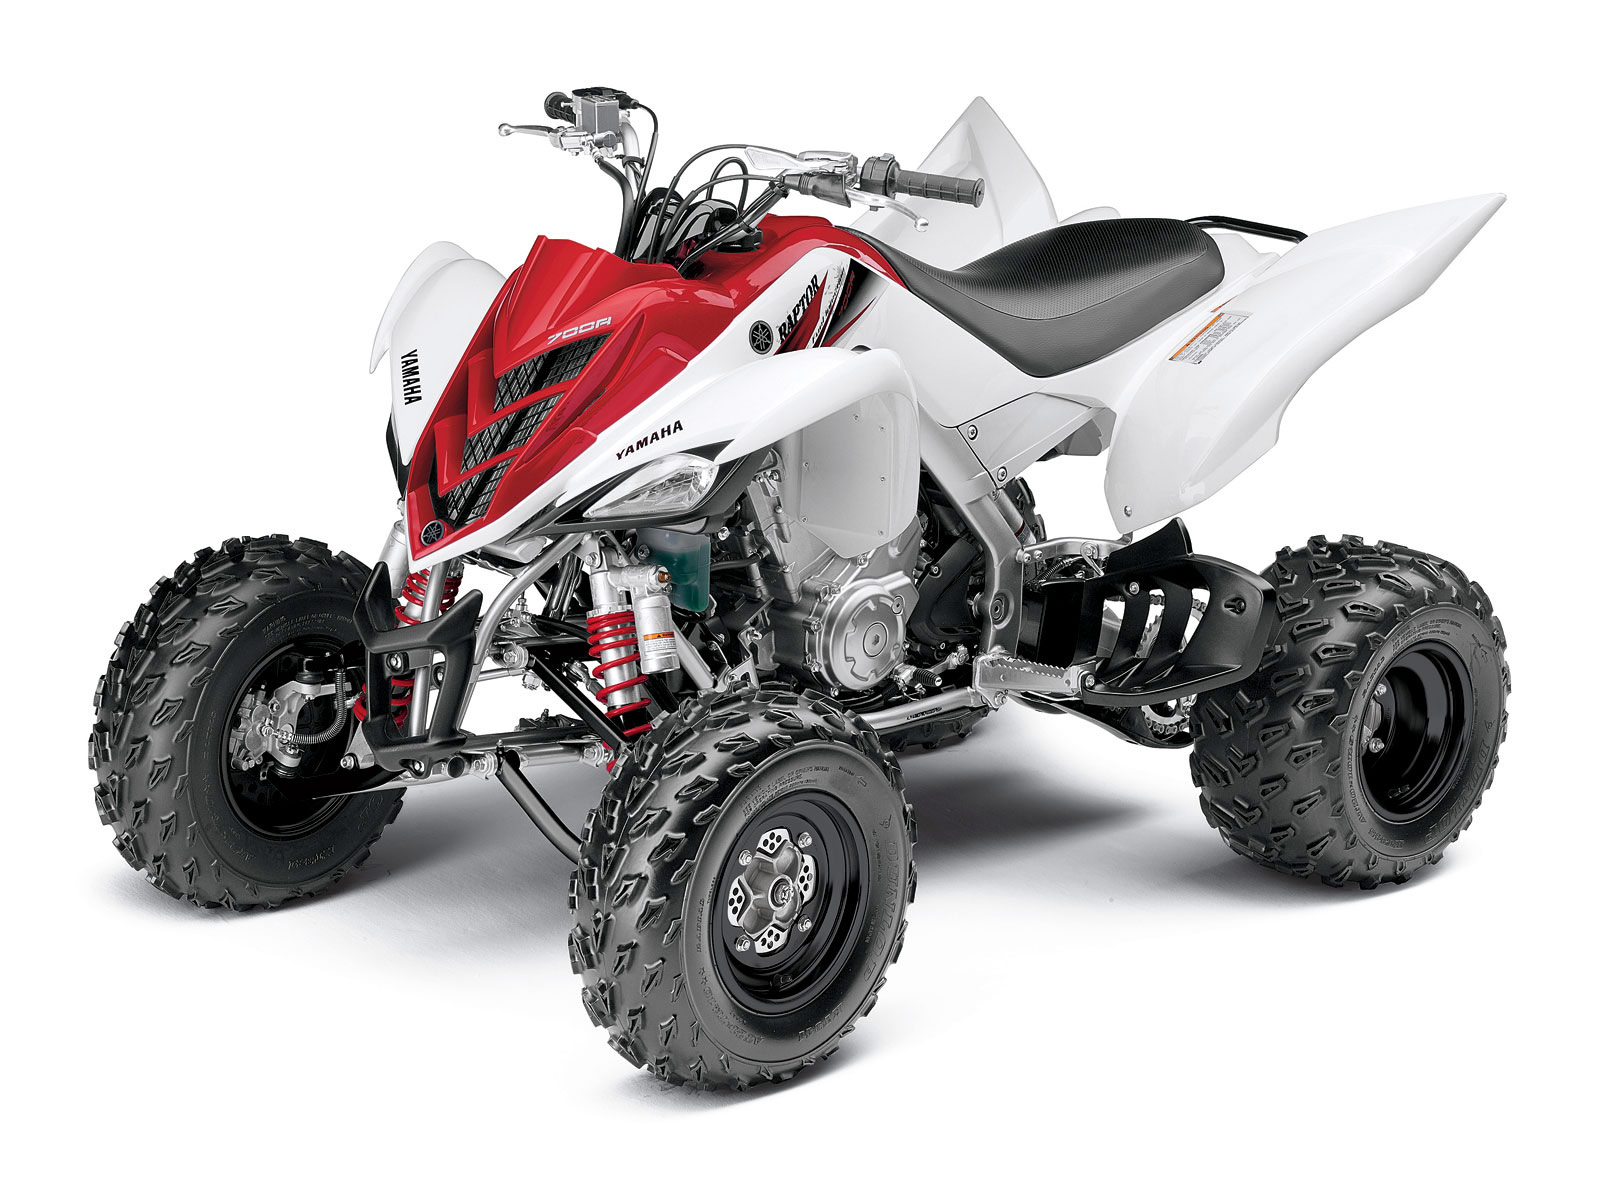 Спортивный квадроцикл Yamaha Raptor (Ямаха Раптор) YFM 250 R — обзор и характеристики модели